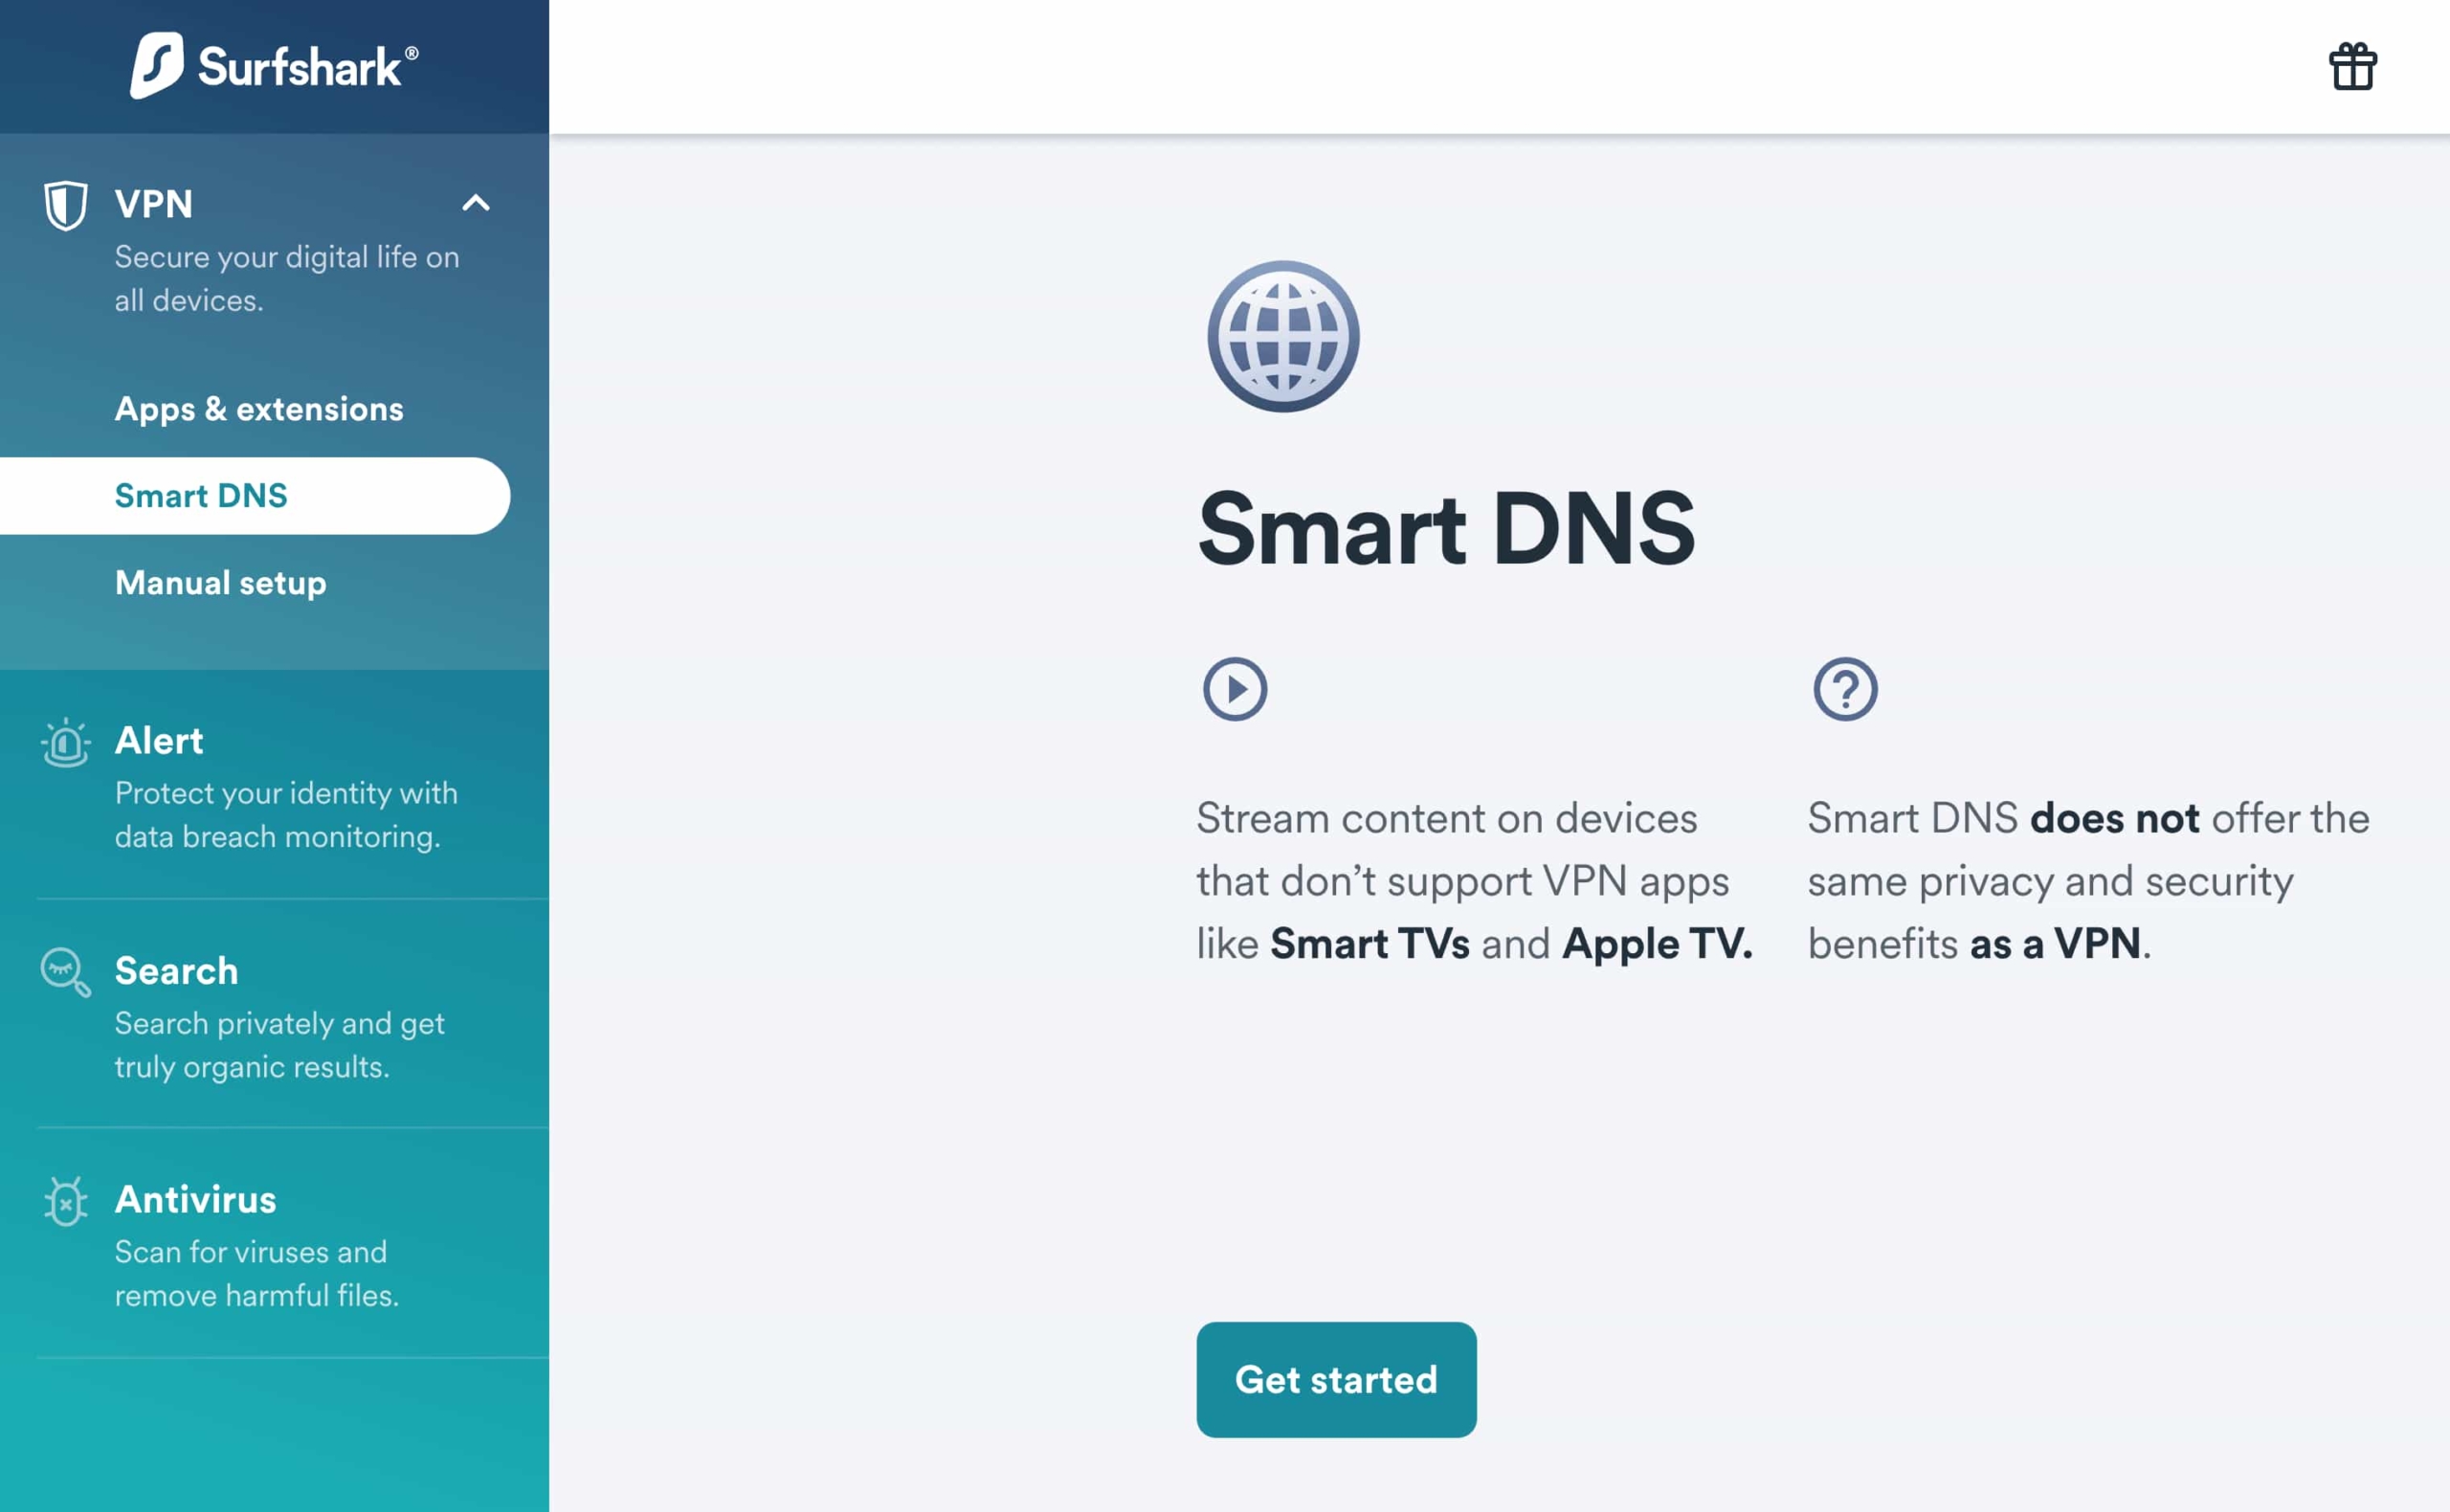 Surfshark Smart DNS